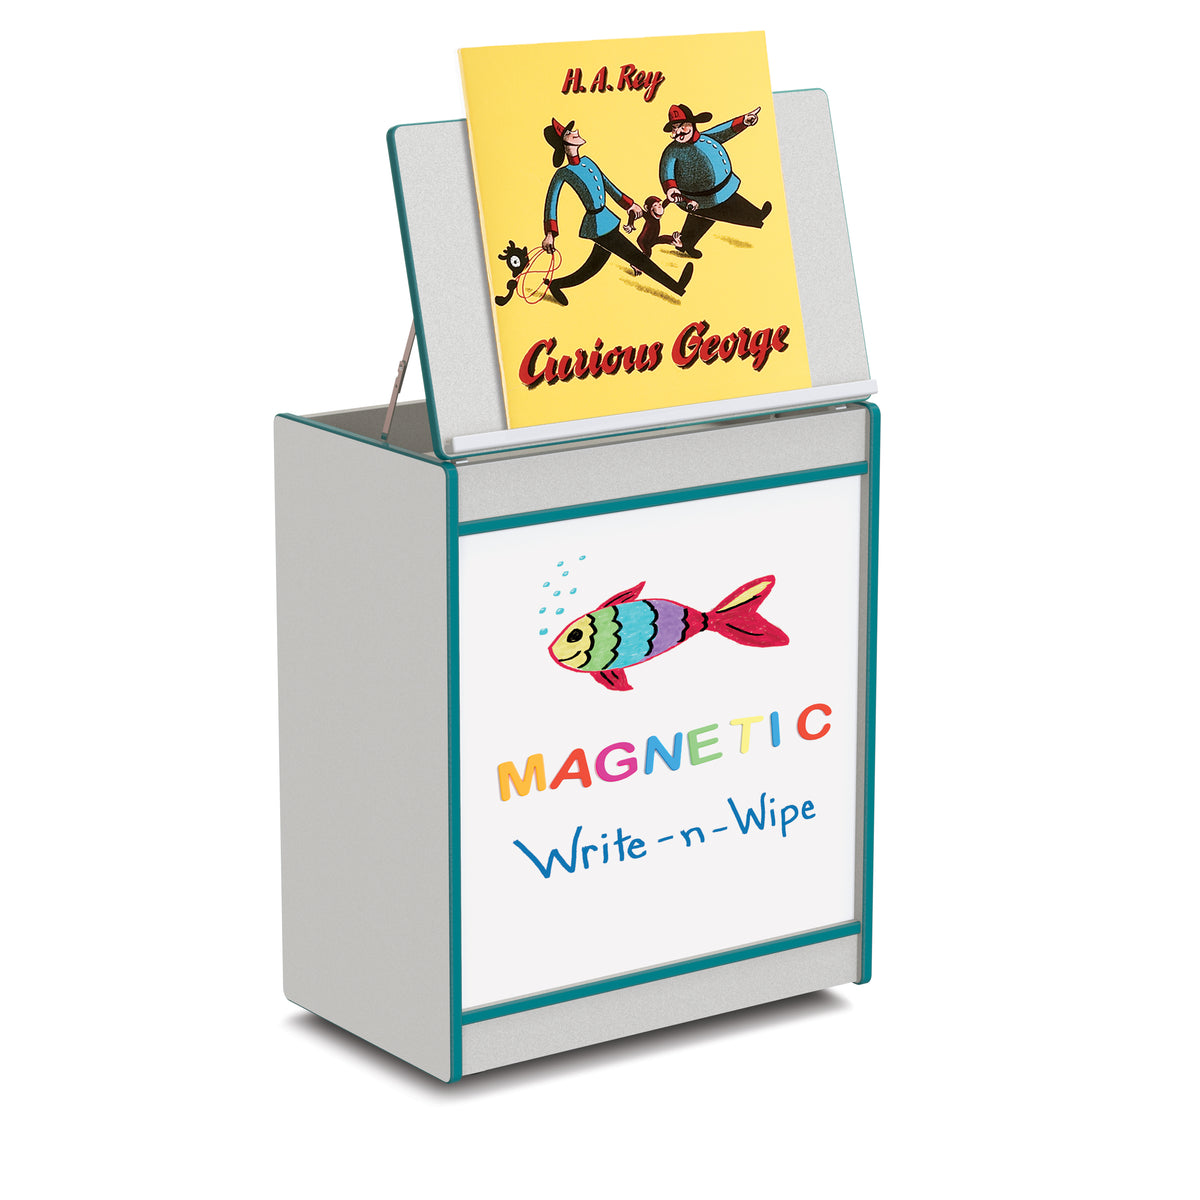 0543JCMG005, Rainbow Accents Big Book Easel - Magnetic Write-n-Wipe - Teal